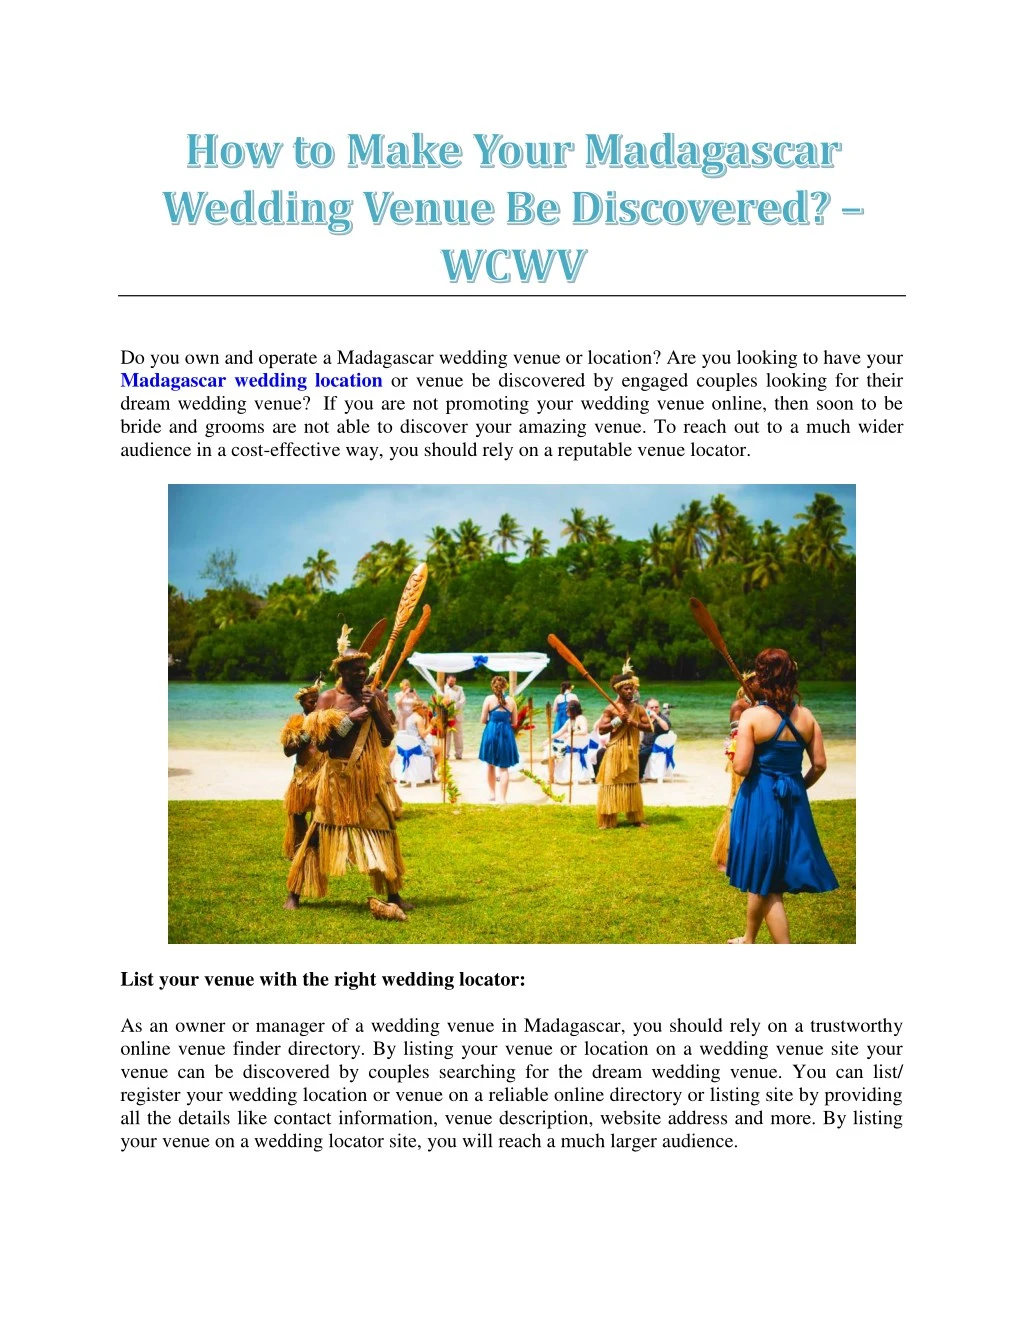 do you own and operate a madagascar wedding venue